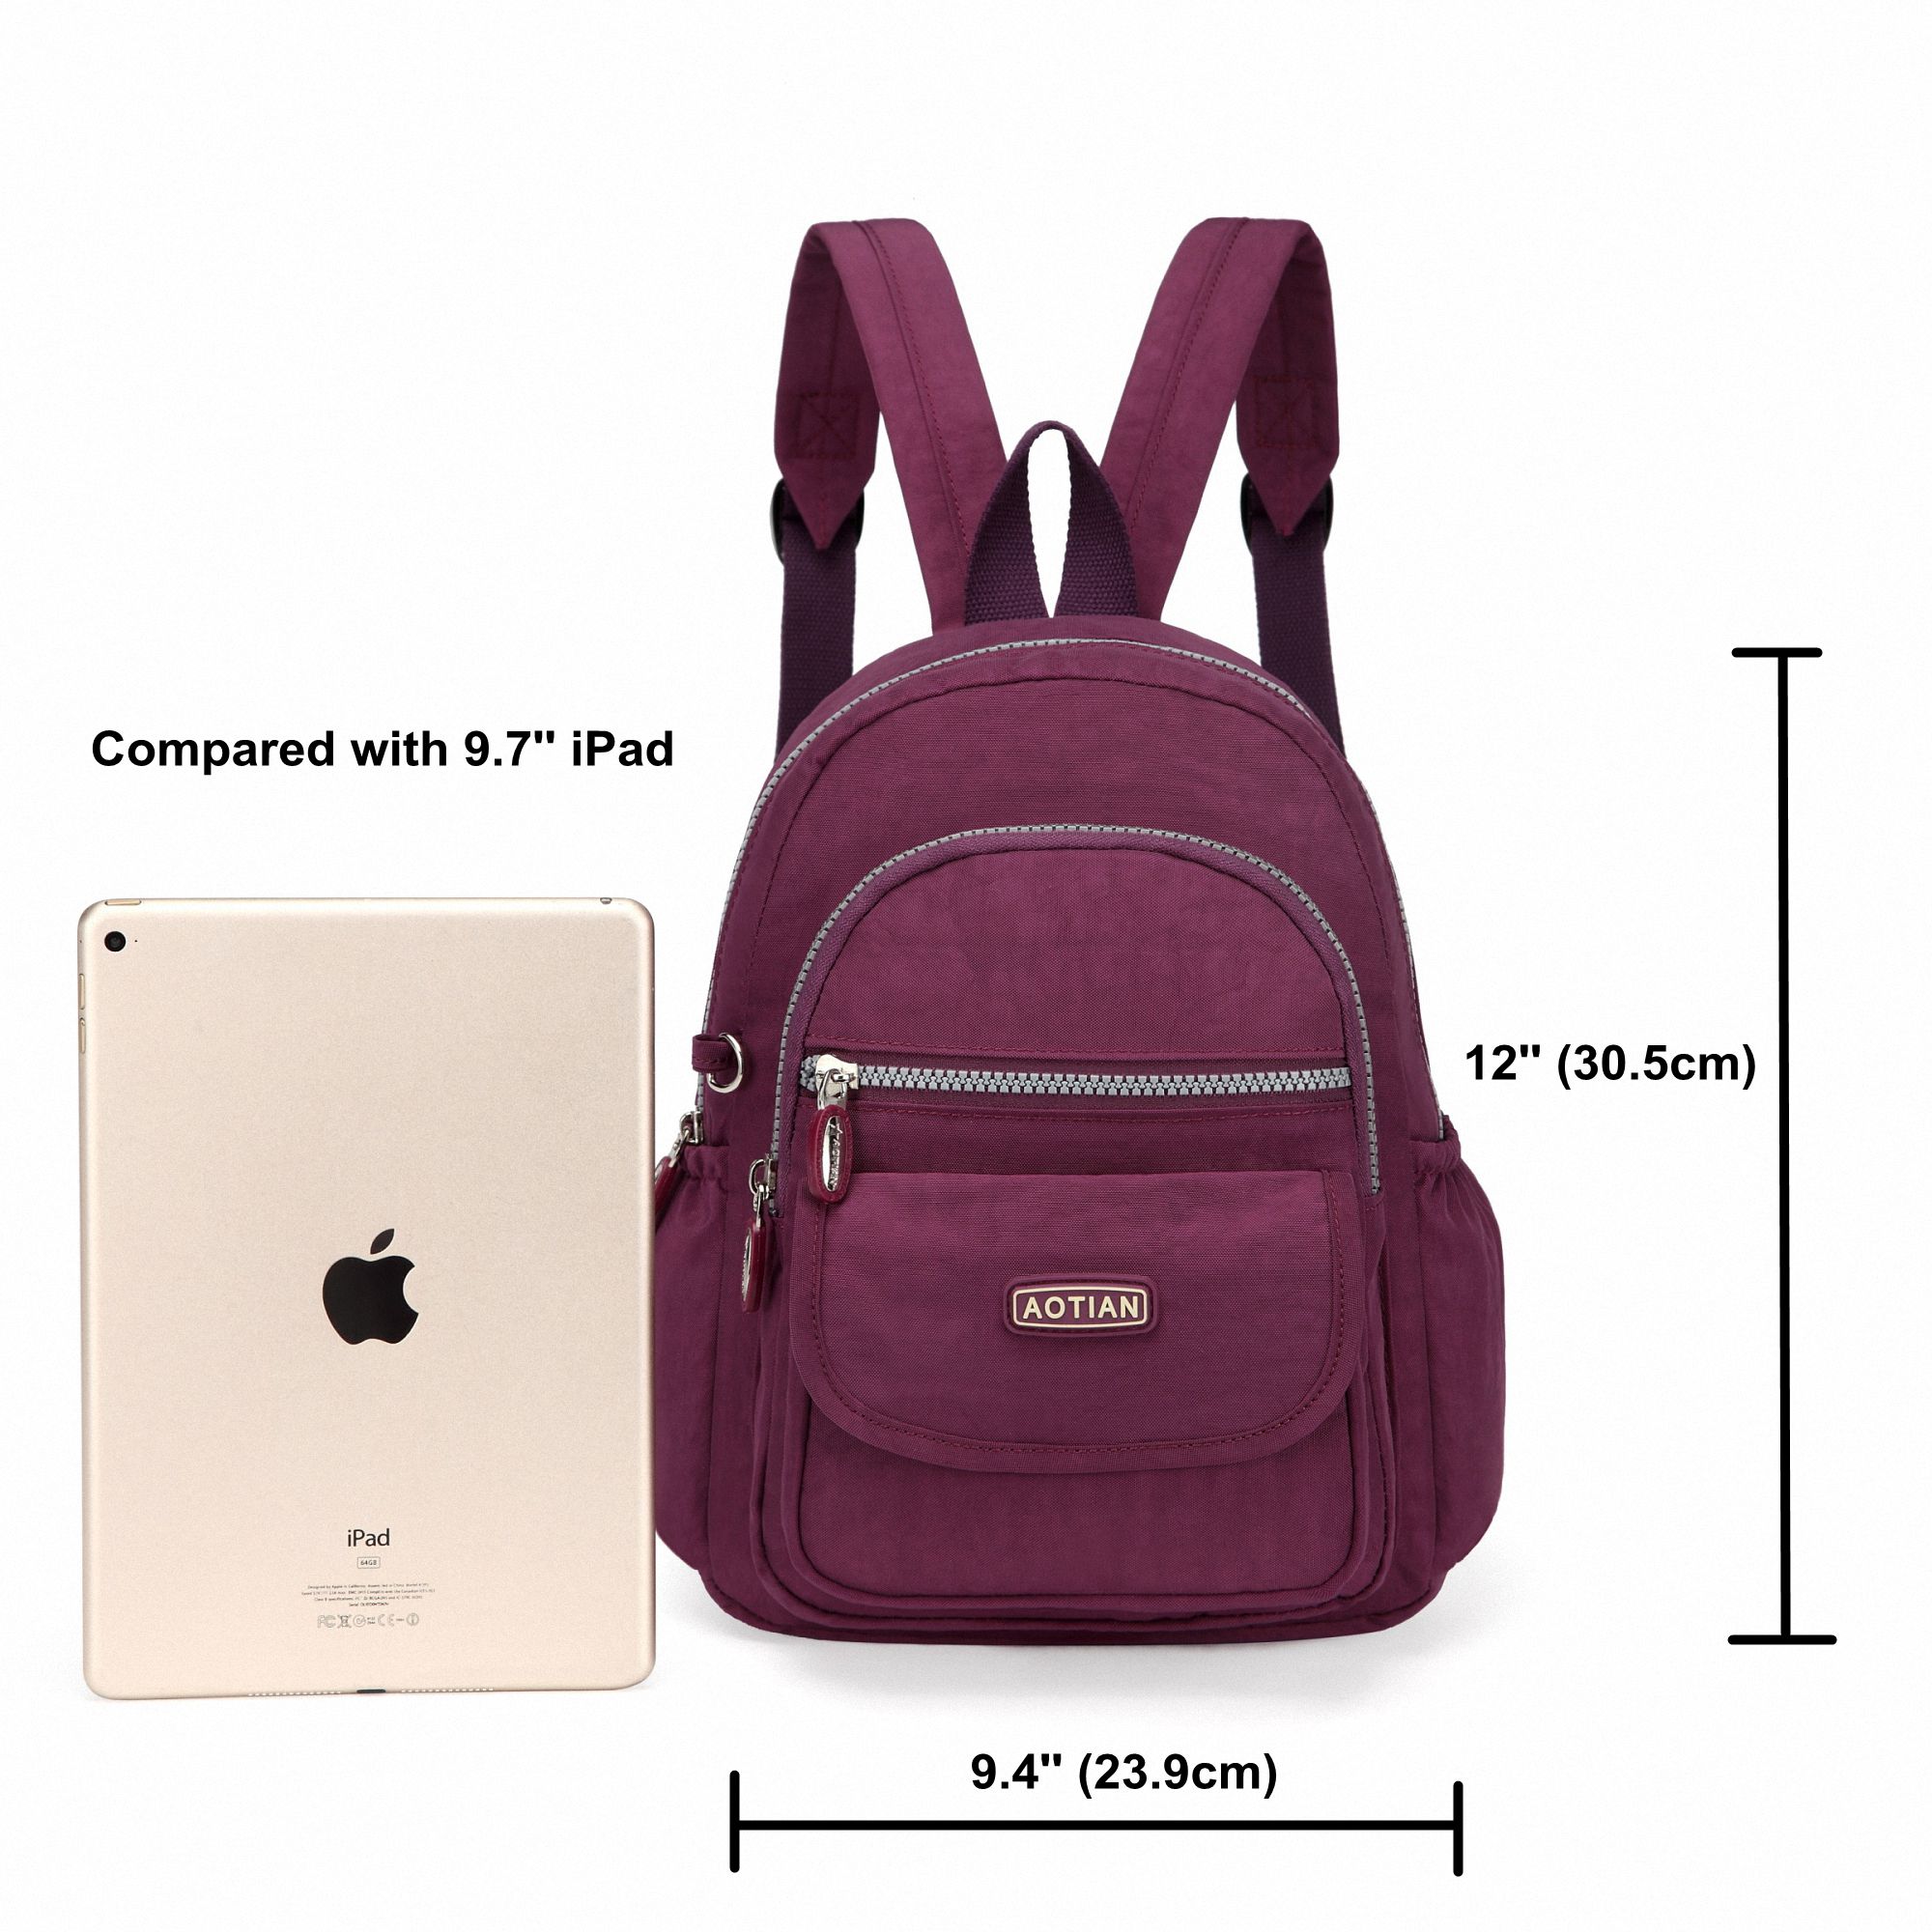 AOTIAN Mini Nylon Women Backpacks Casual Lightweight Small Daypack for Girls Purple - image 4 of 7